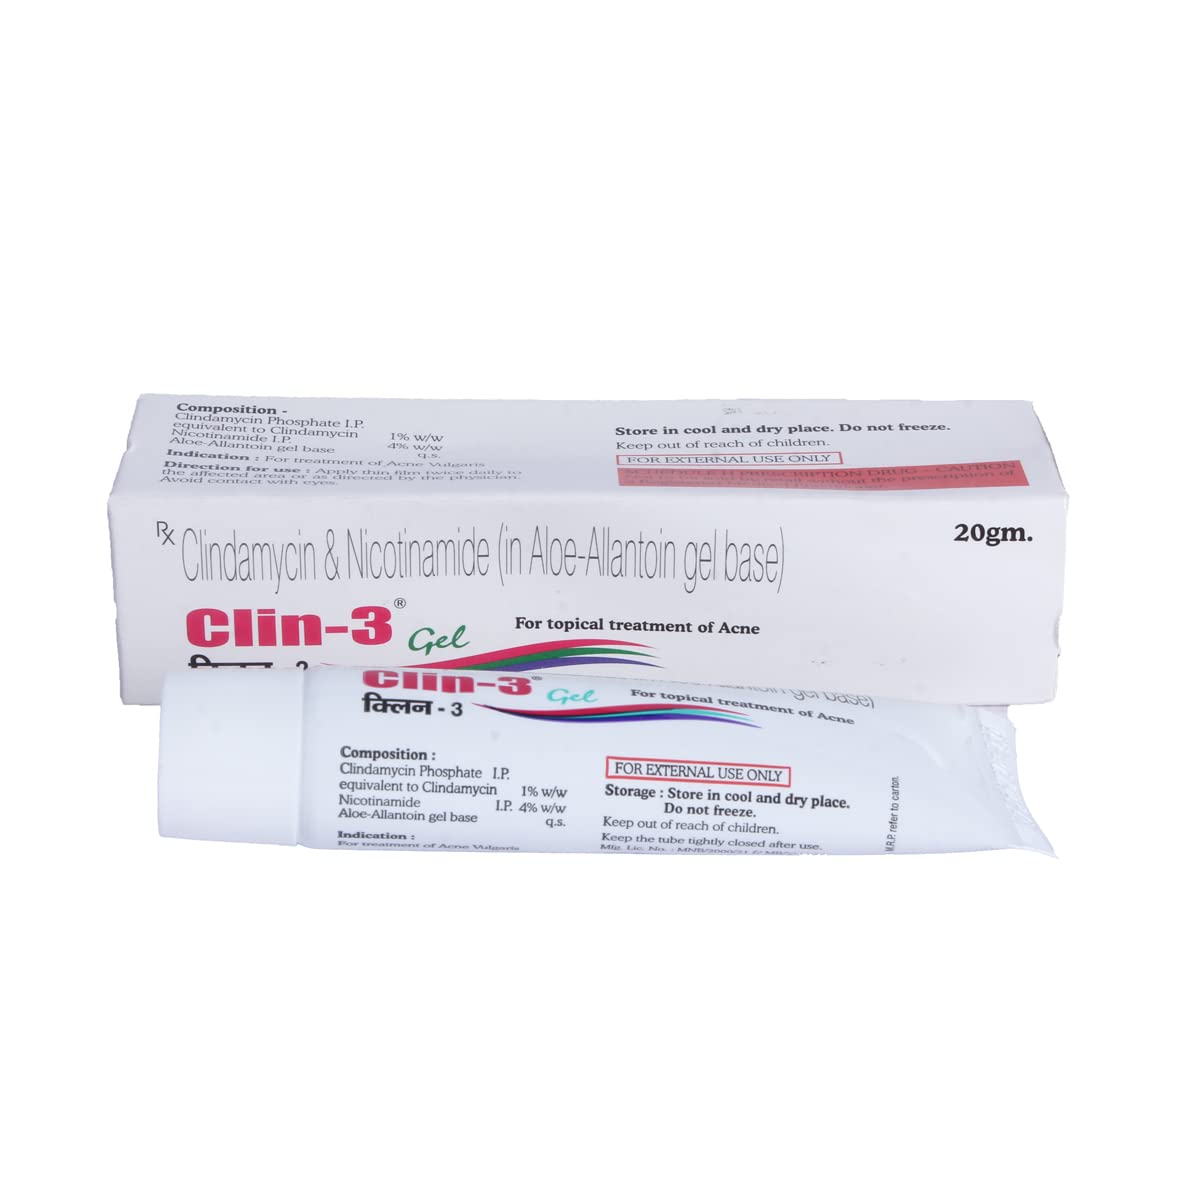 Clin-3 Gel